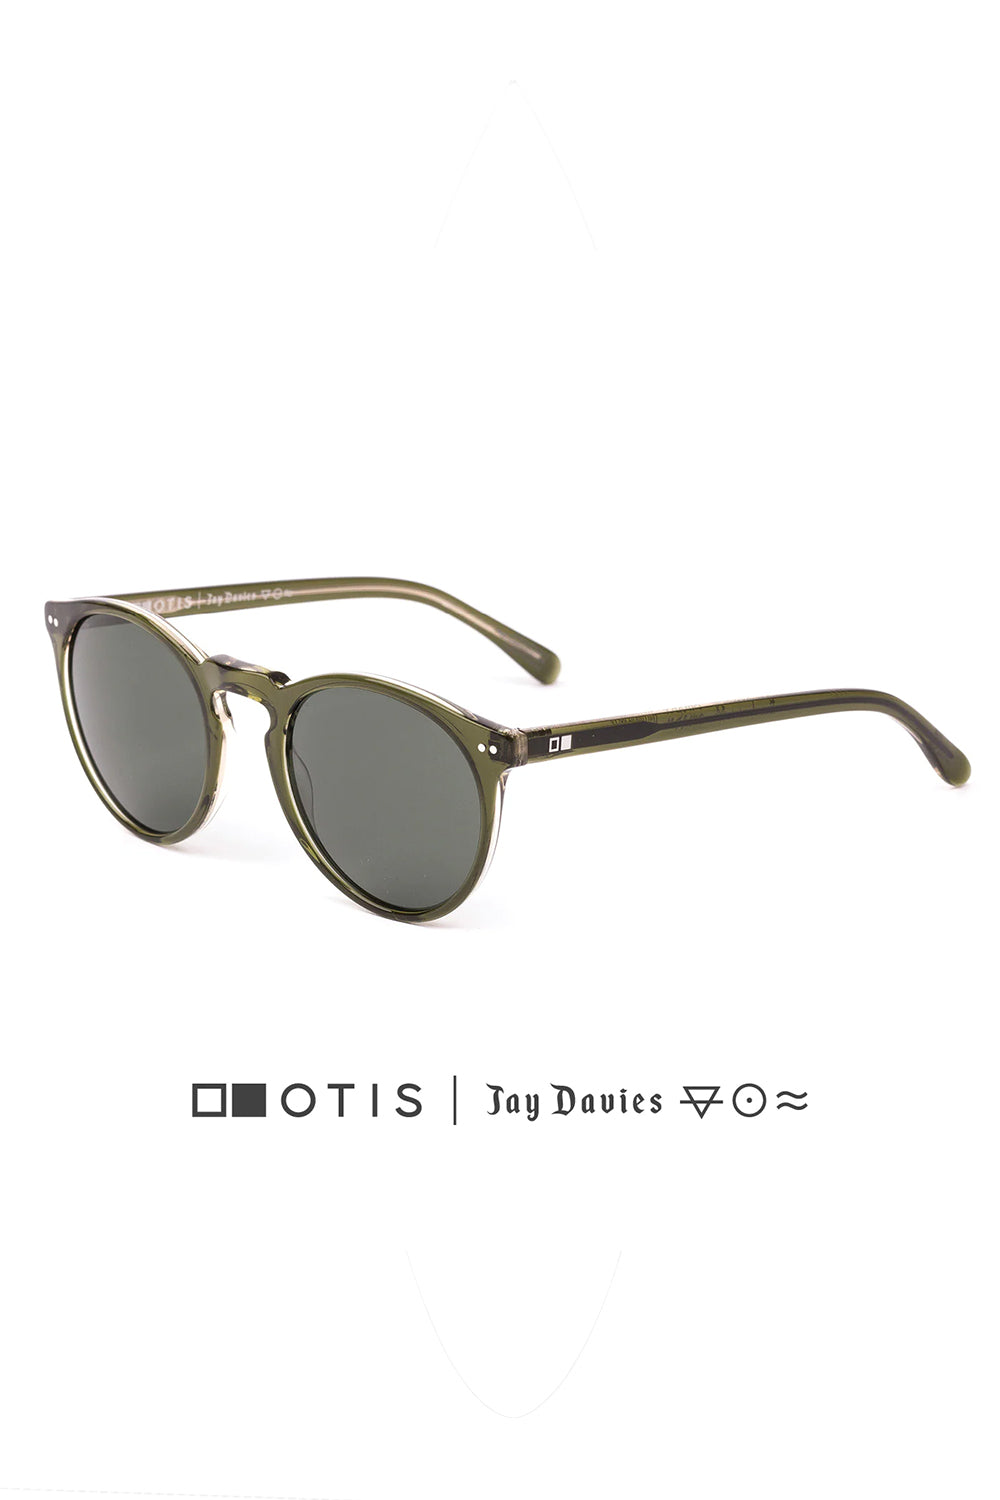 OTIS Omar X Sunglasses